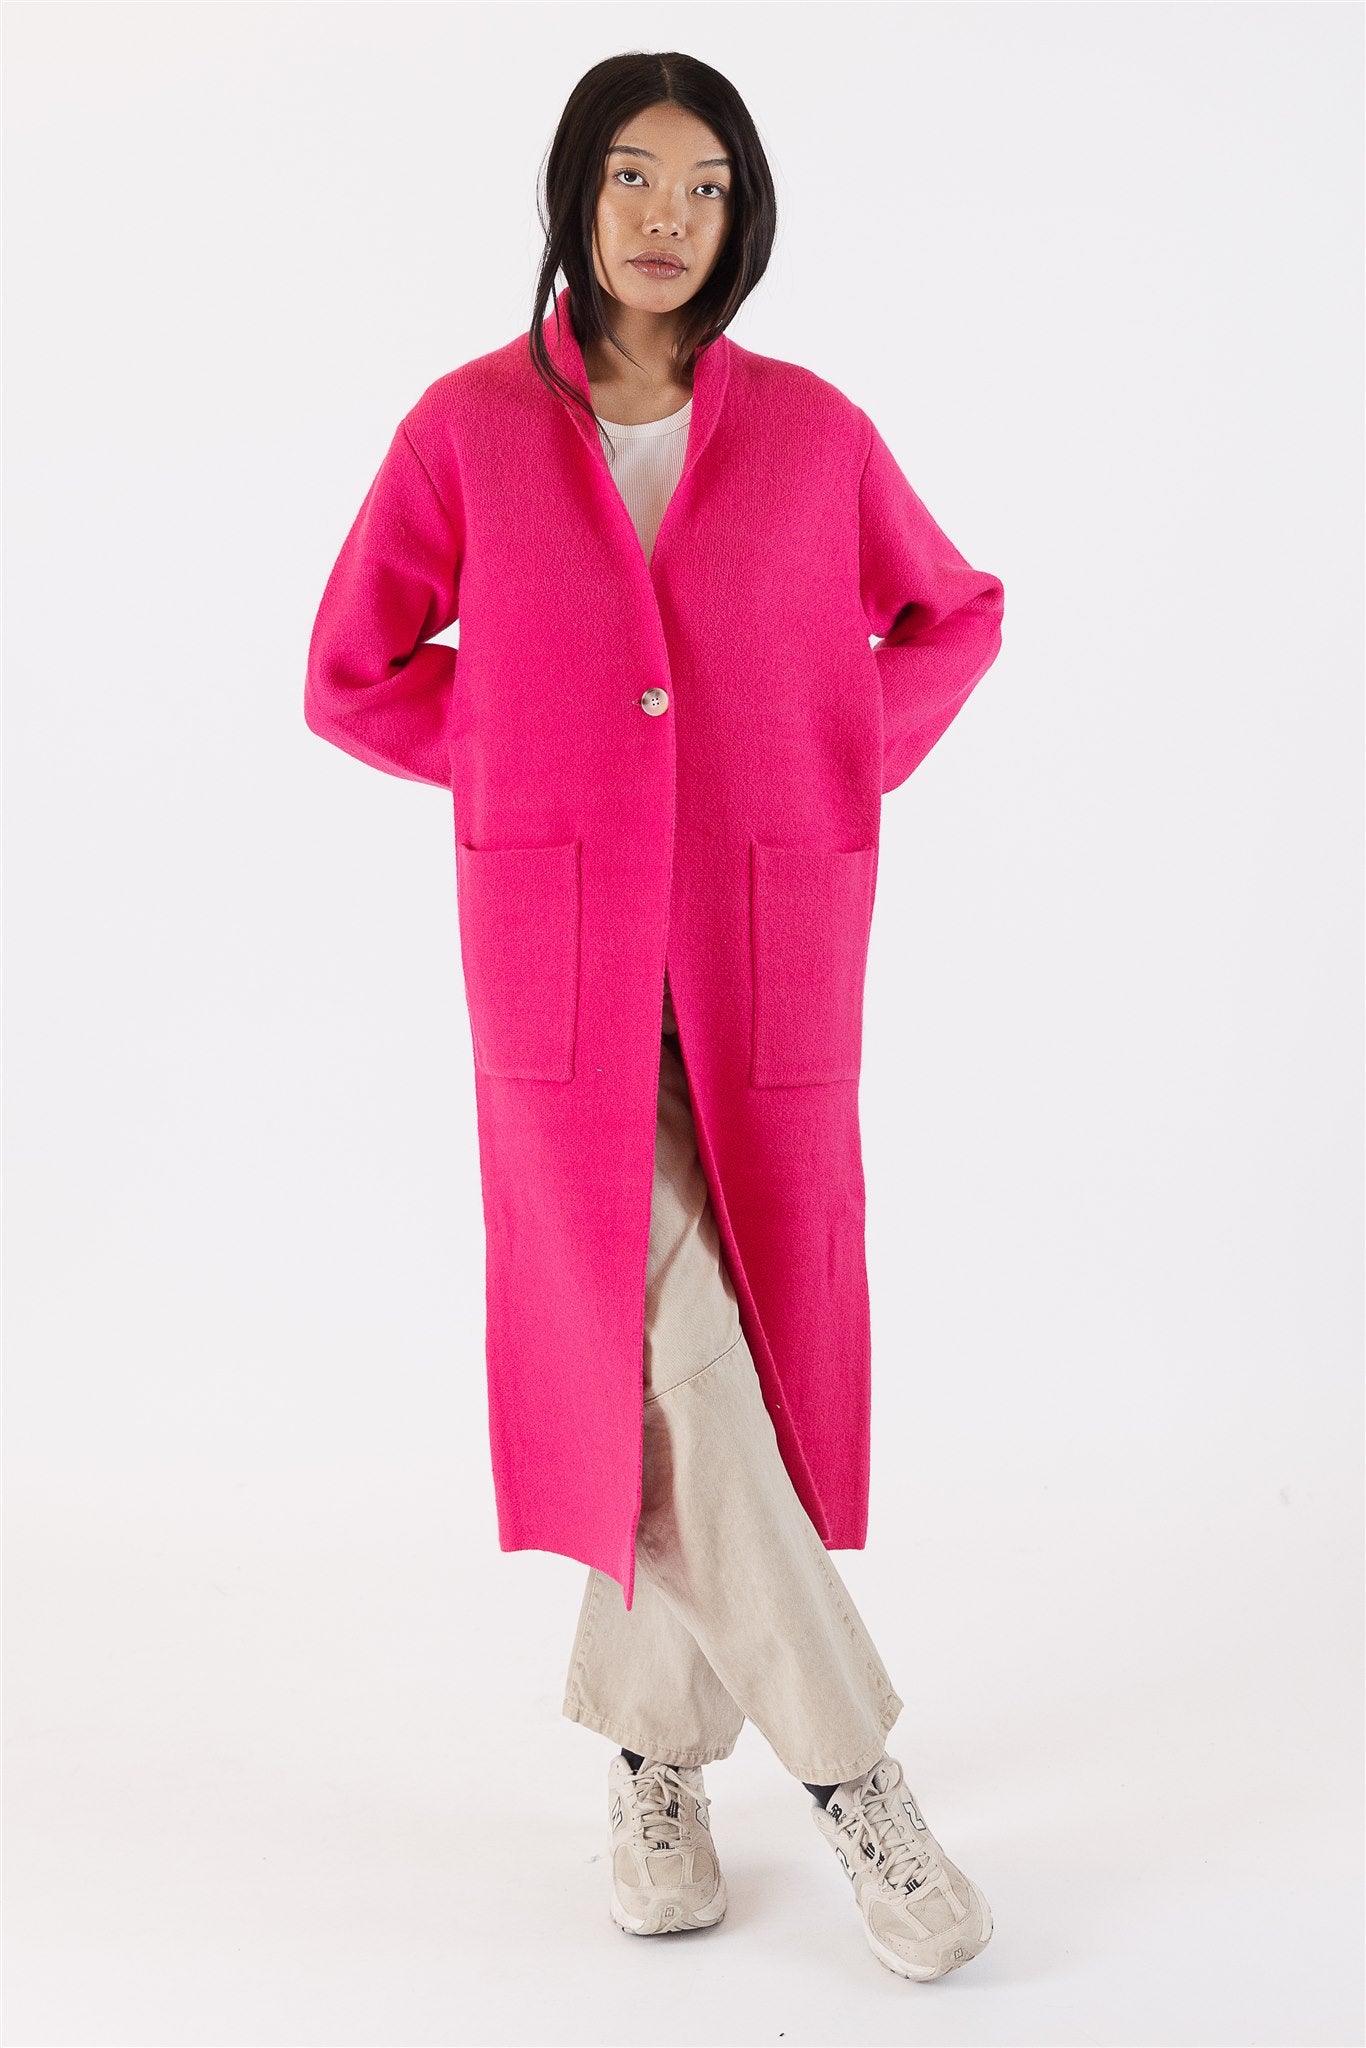 Lyla+Luxe Coat - Judith Knit - Cherry